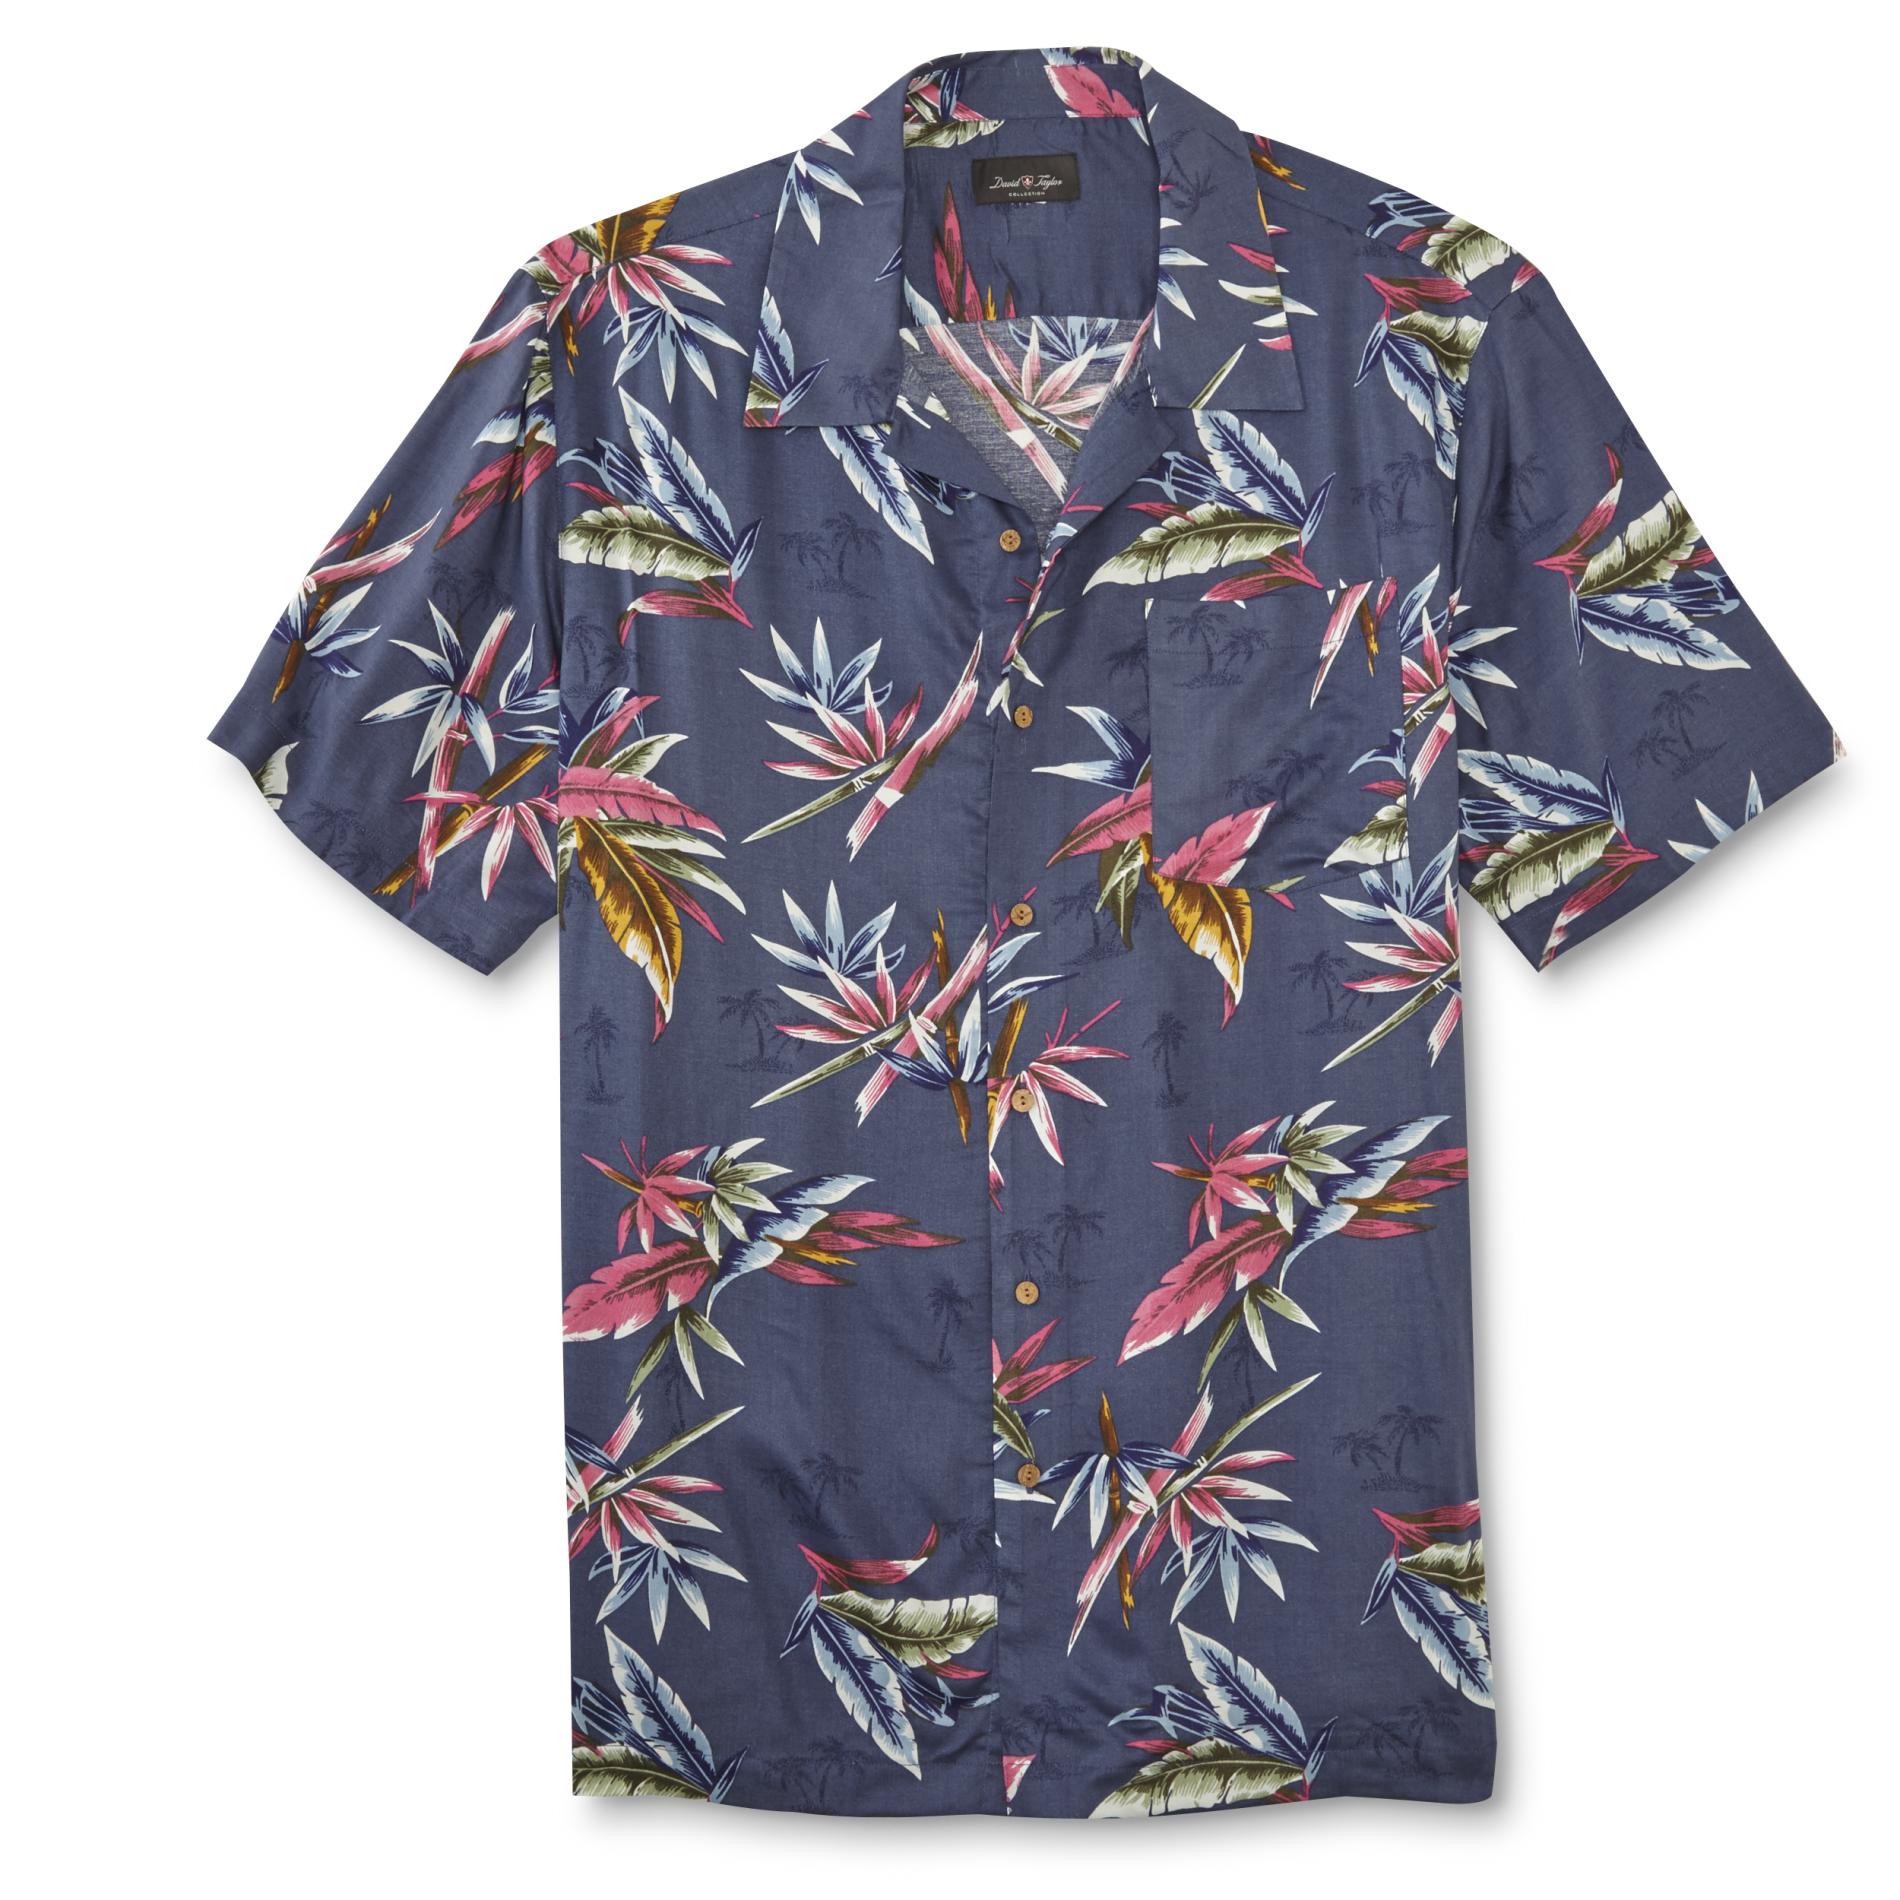 David Taylor Collection Men's Button-Front Shirt - Tropical